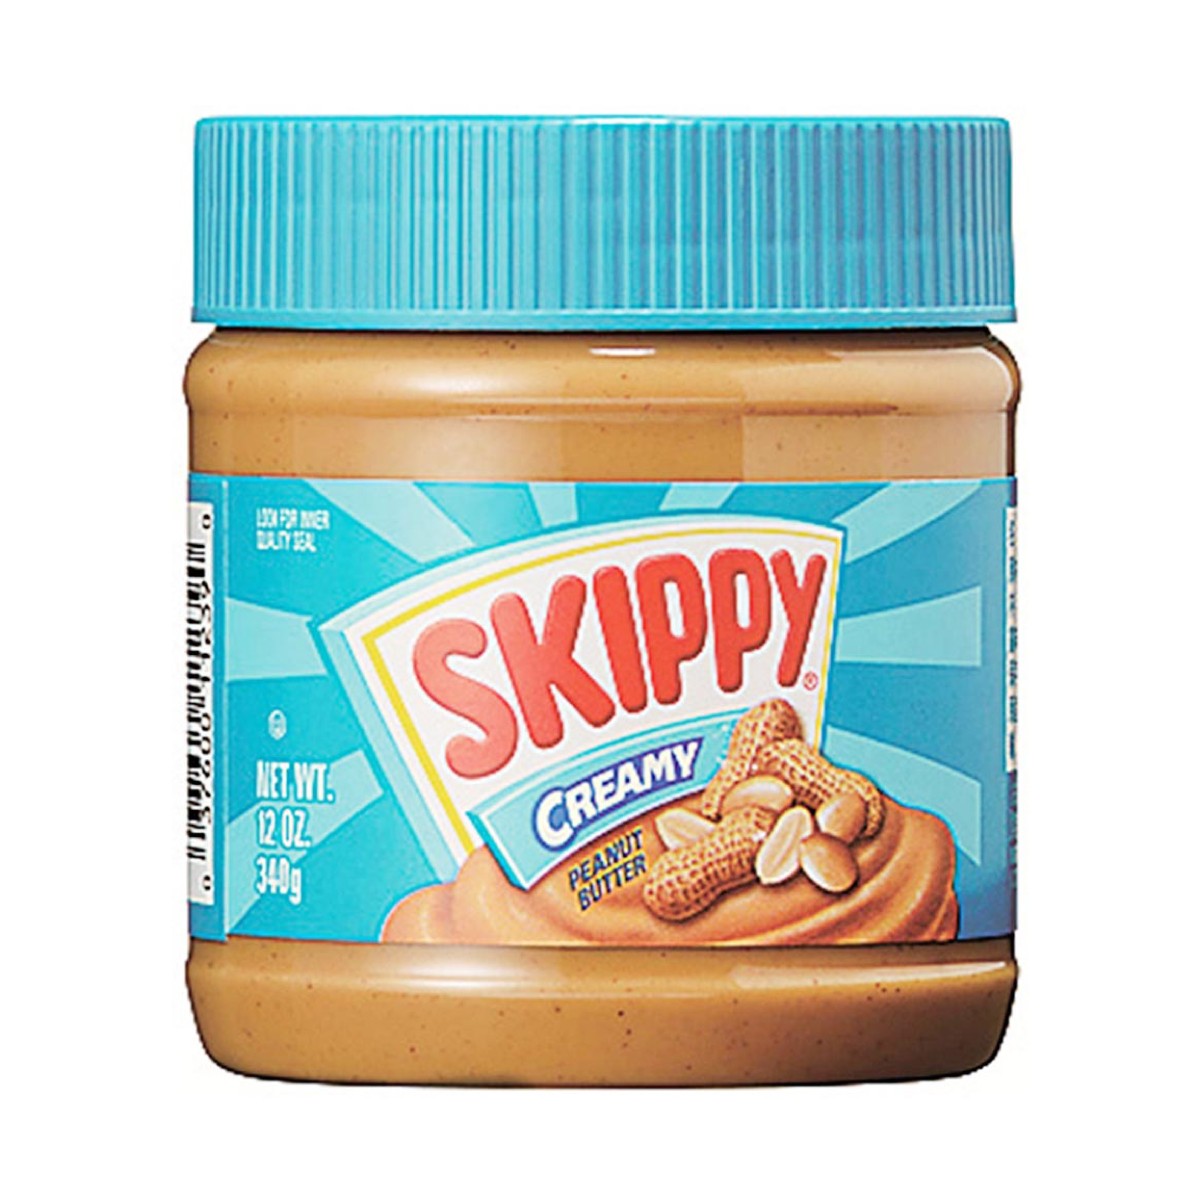 skipi- peanuts butter creamy Skippy Peanut Butter Creamy 12oz(340g)×4ps.